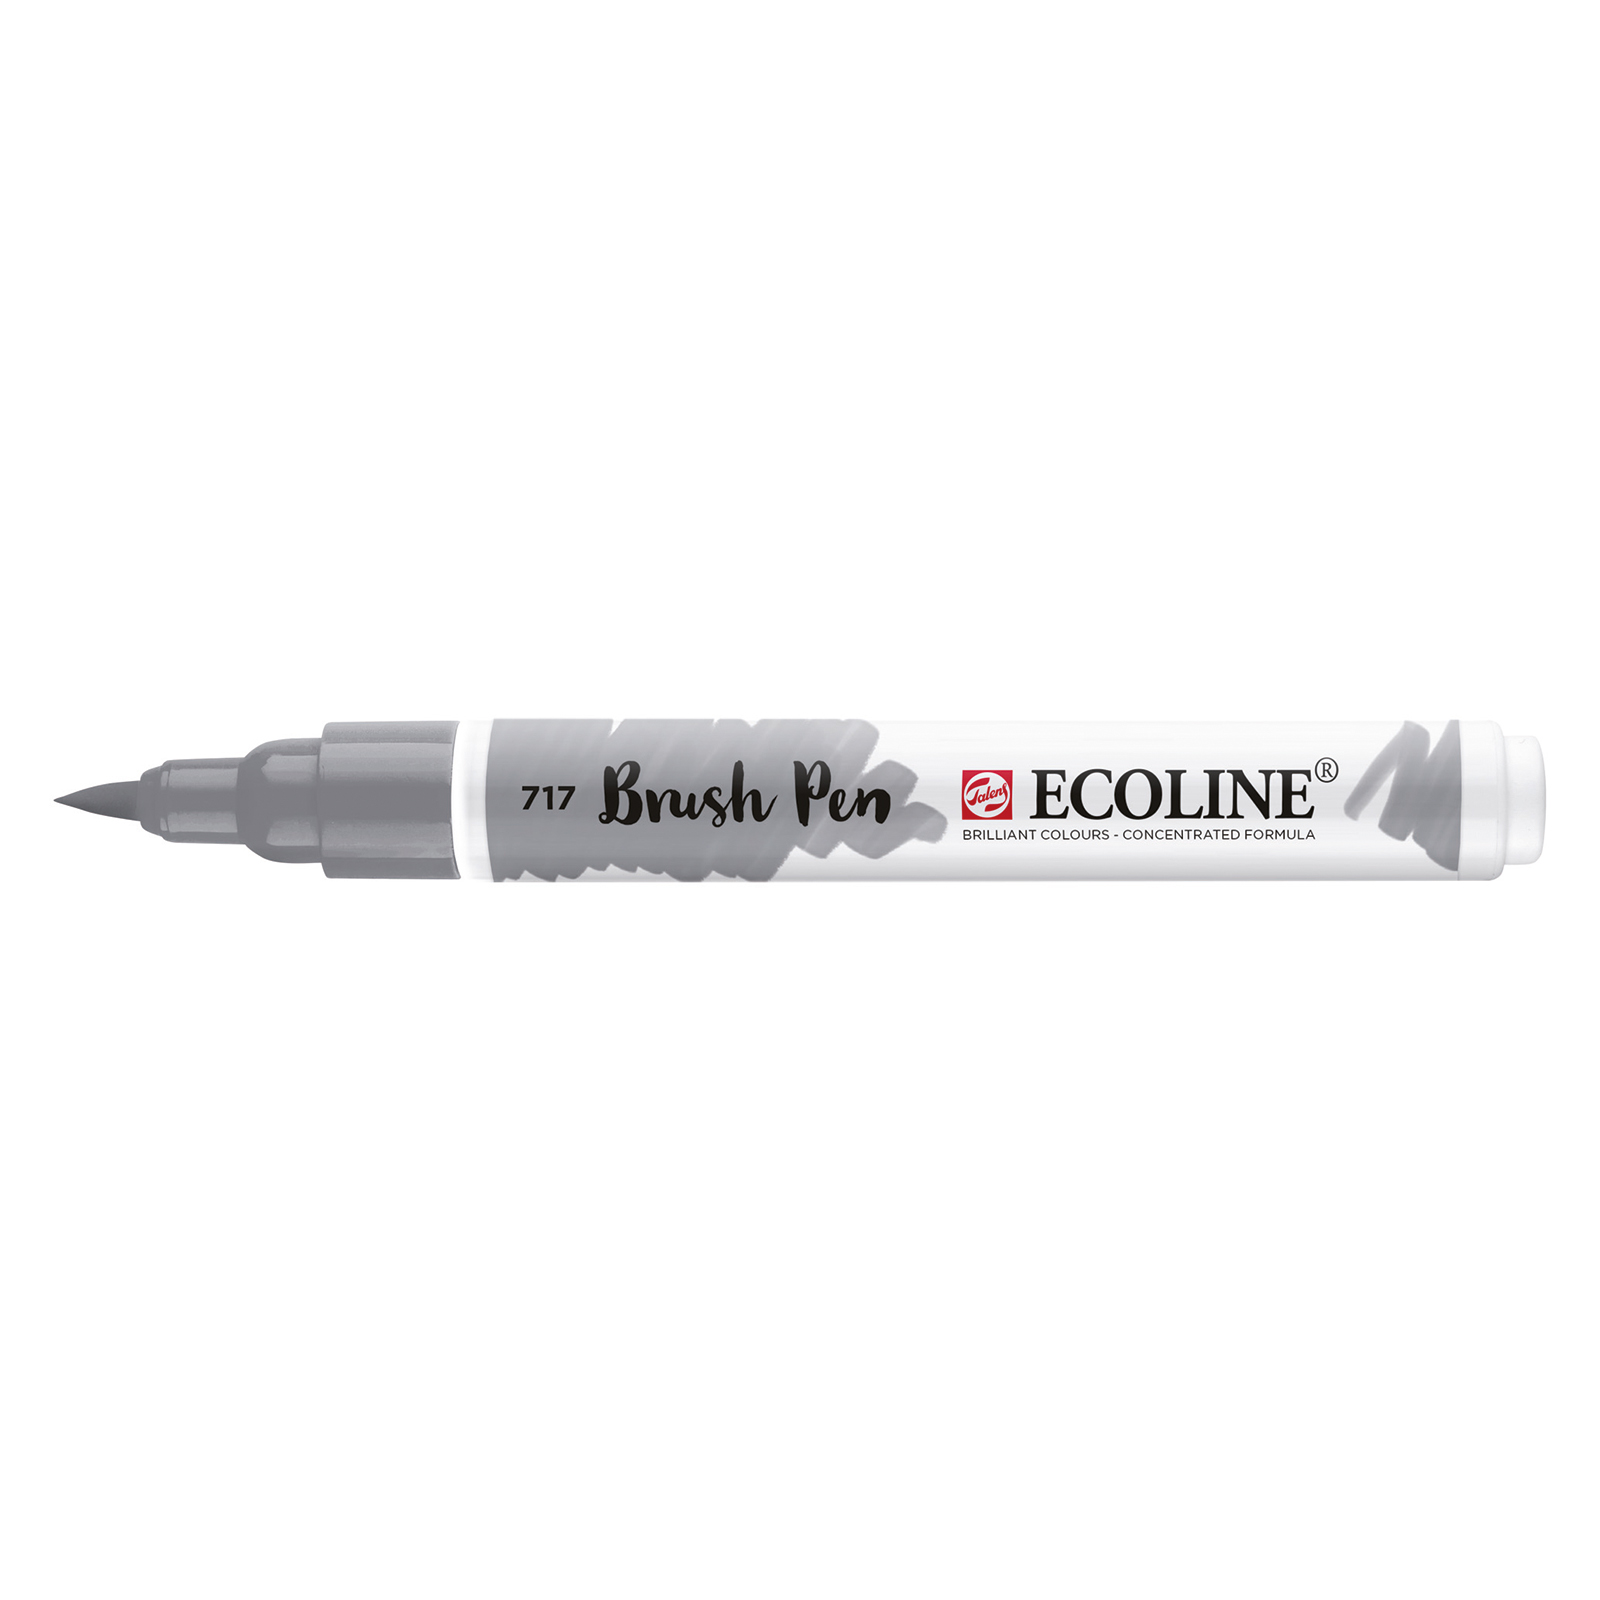 Ecoline • Brush Pen Cold Grey 717